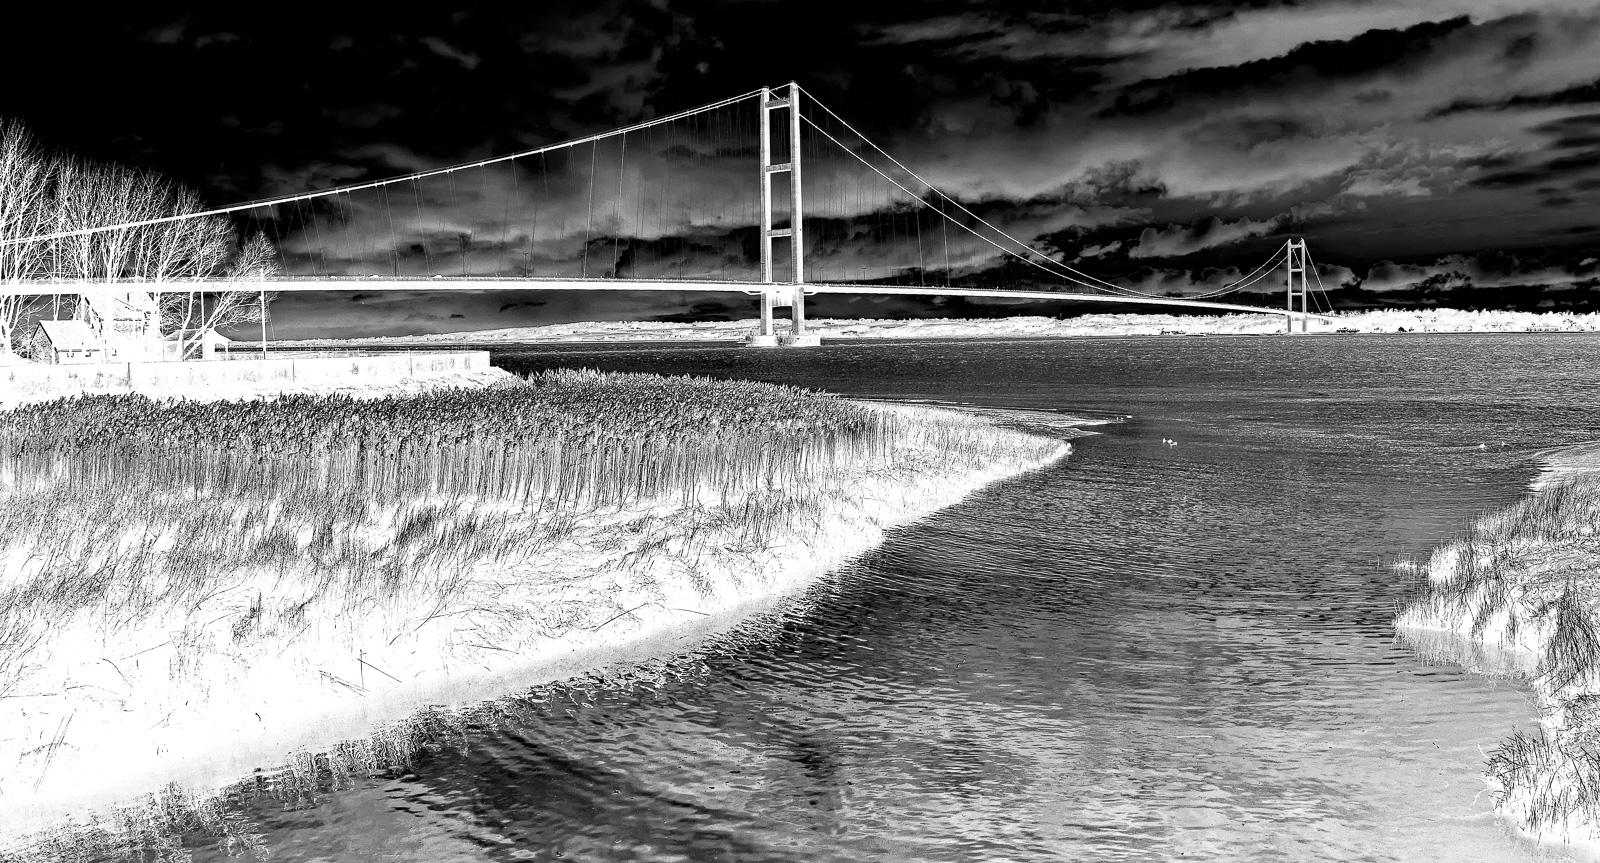 Humber Bridge: Bridge in Negative, David Williamson